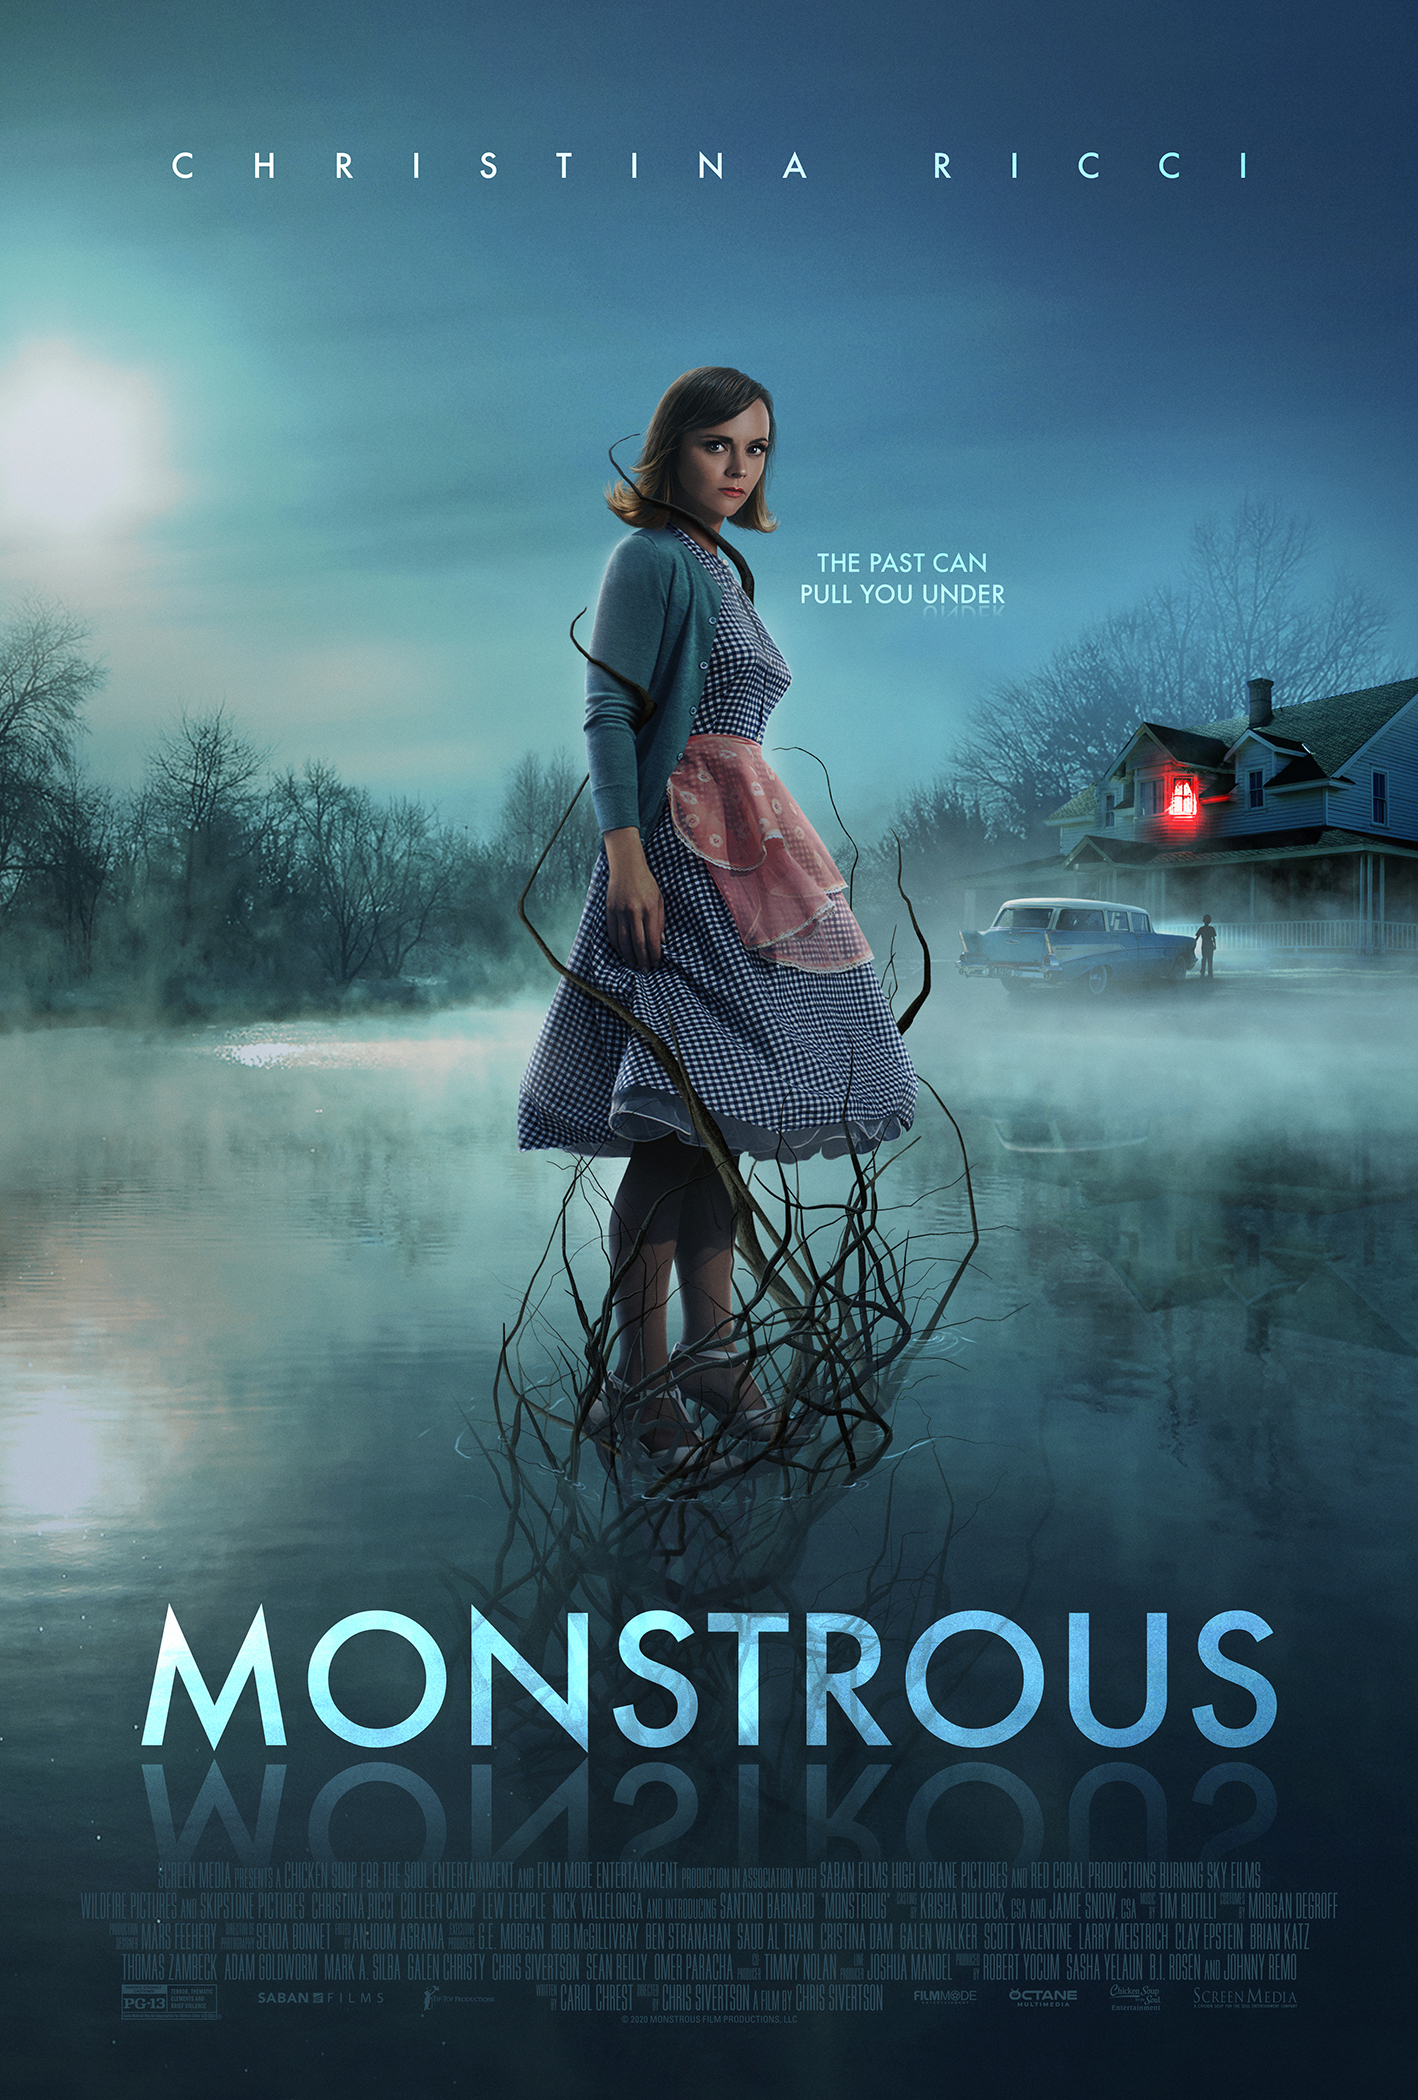 Monstrous starring Christina Ricci